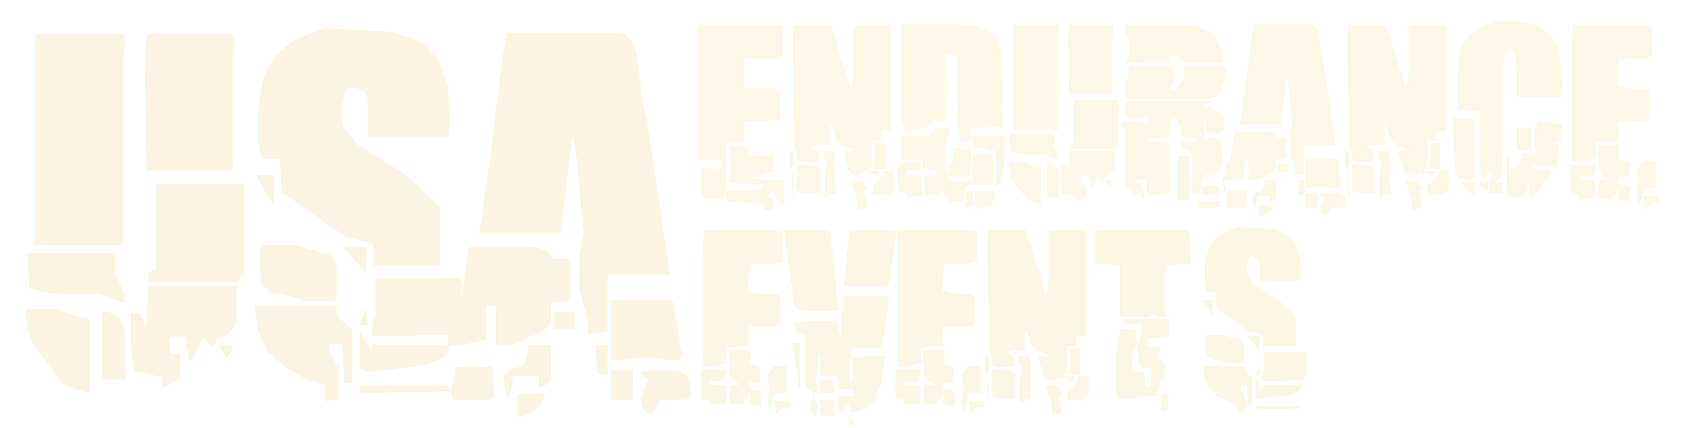 usa endurance events logo png 1.png